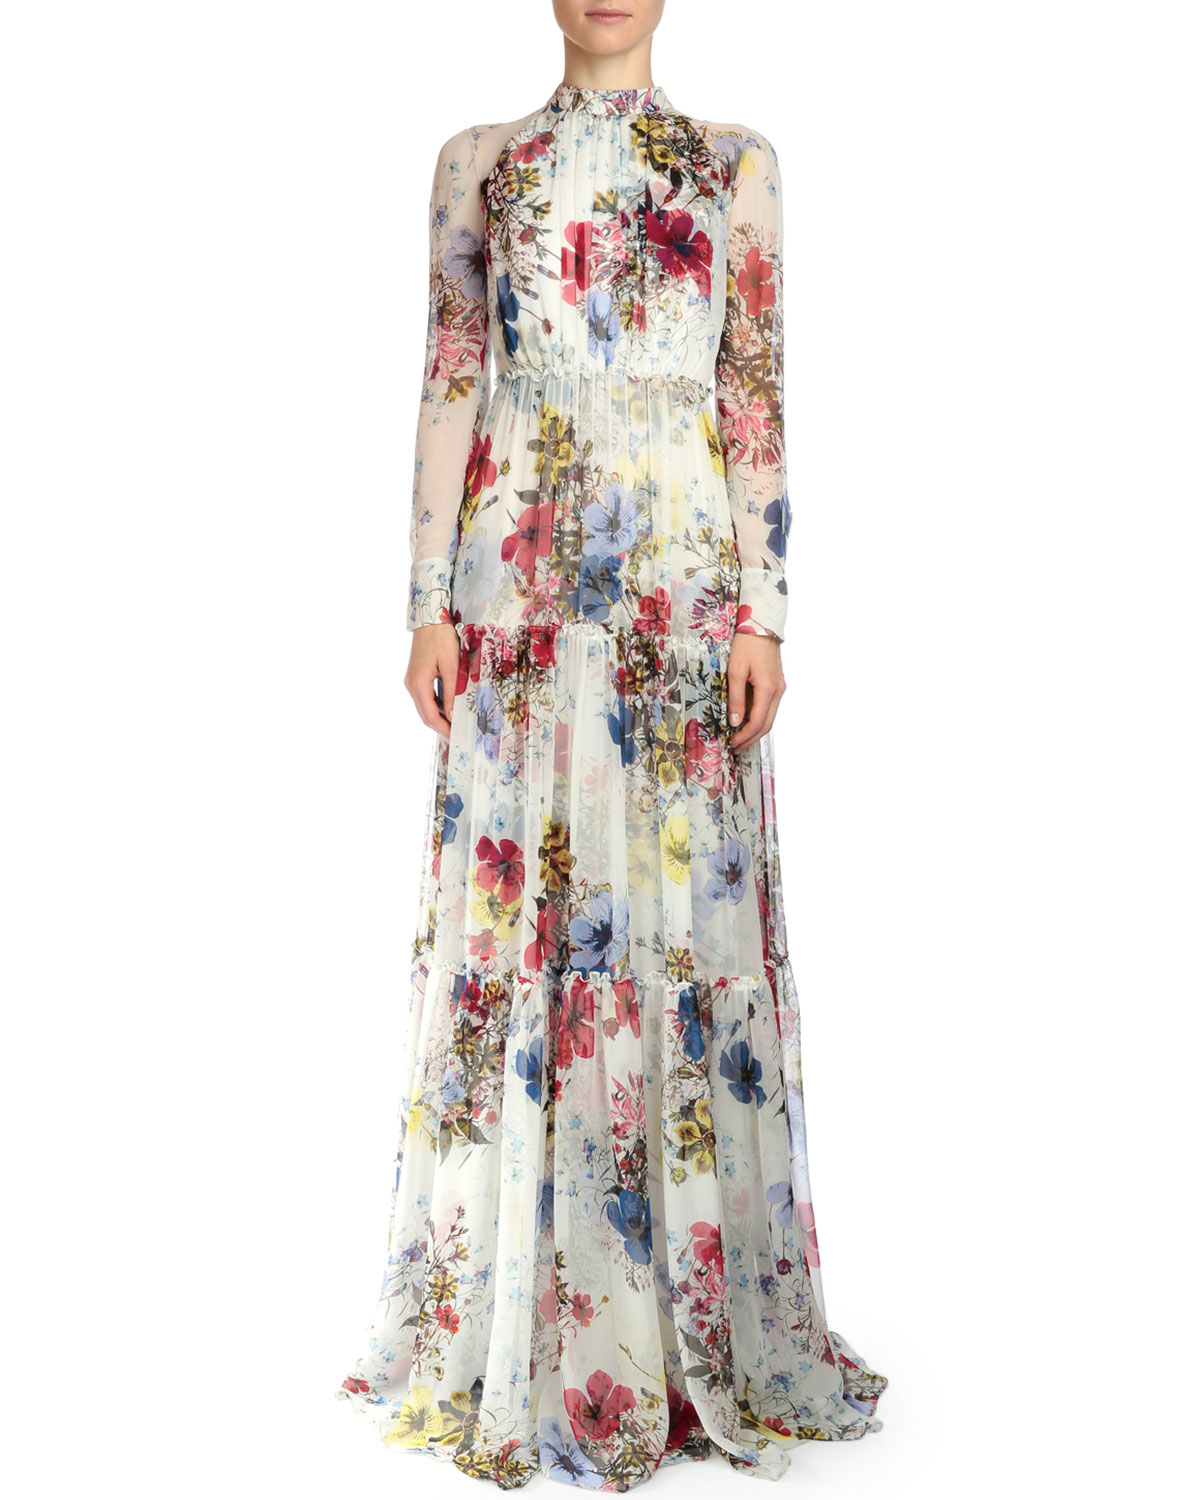 Lyst - Erdem Denise Floral-print Silk Voile Gown